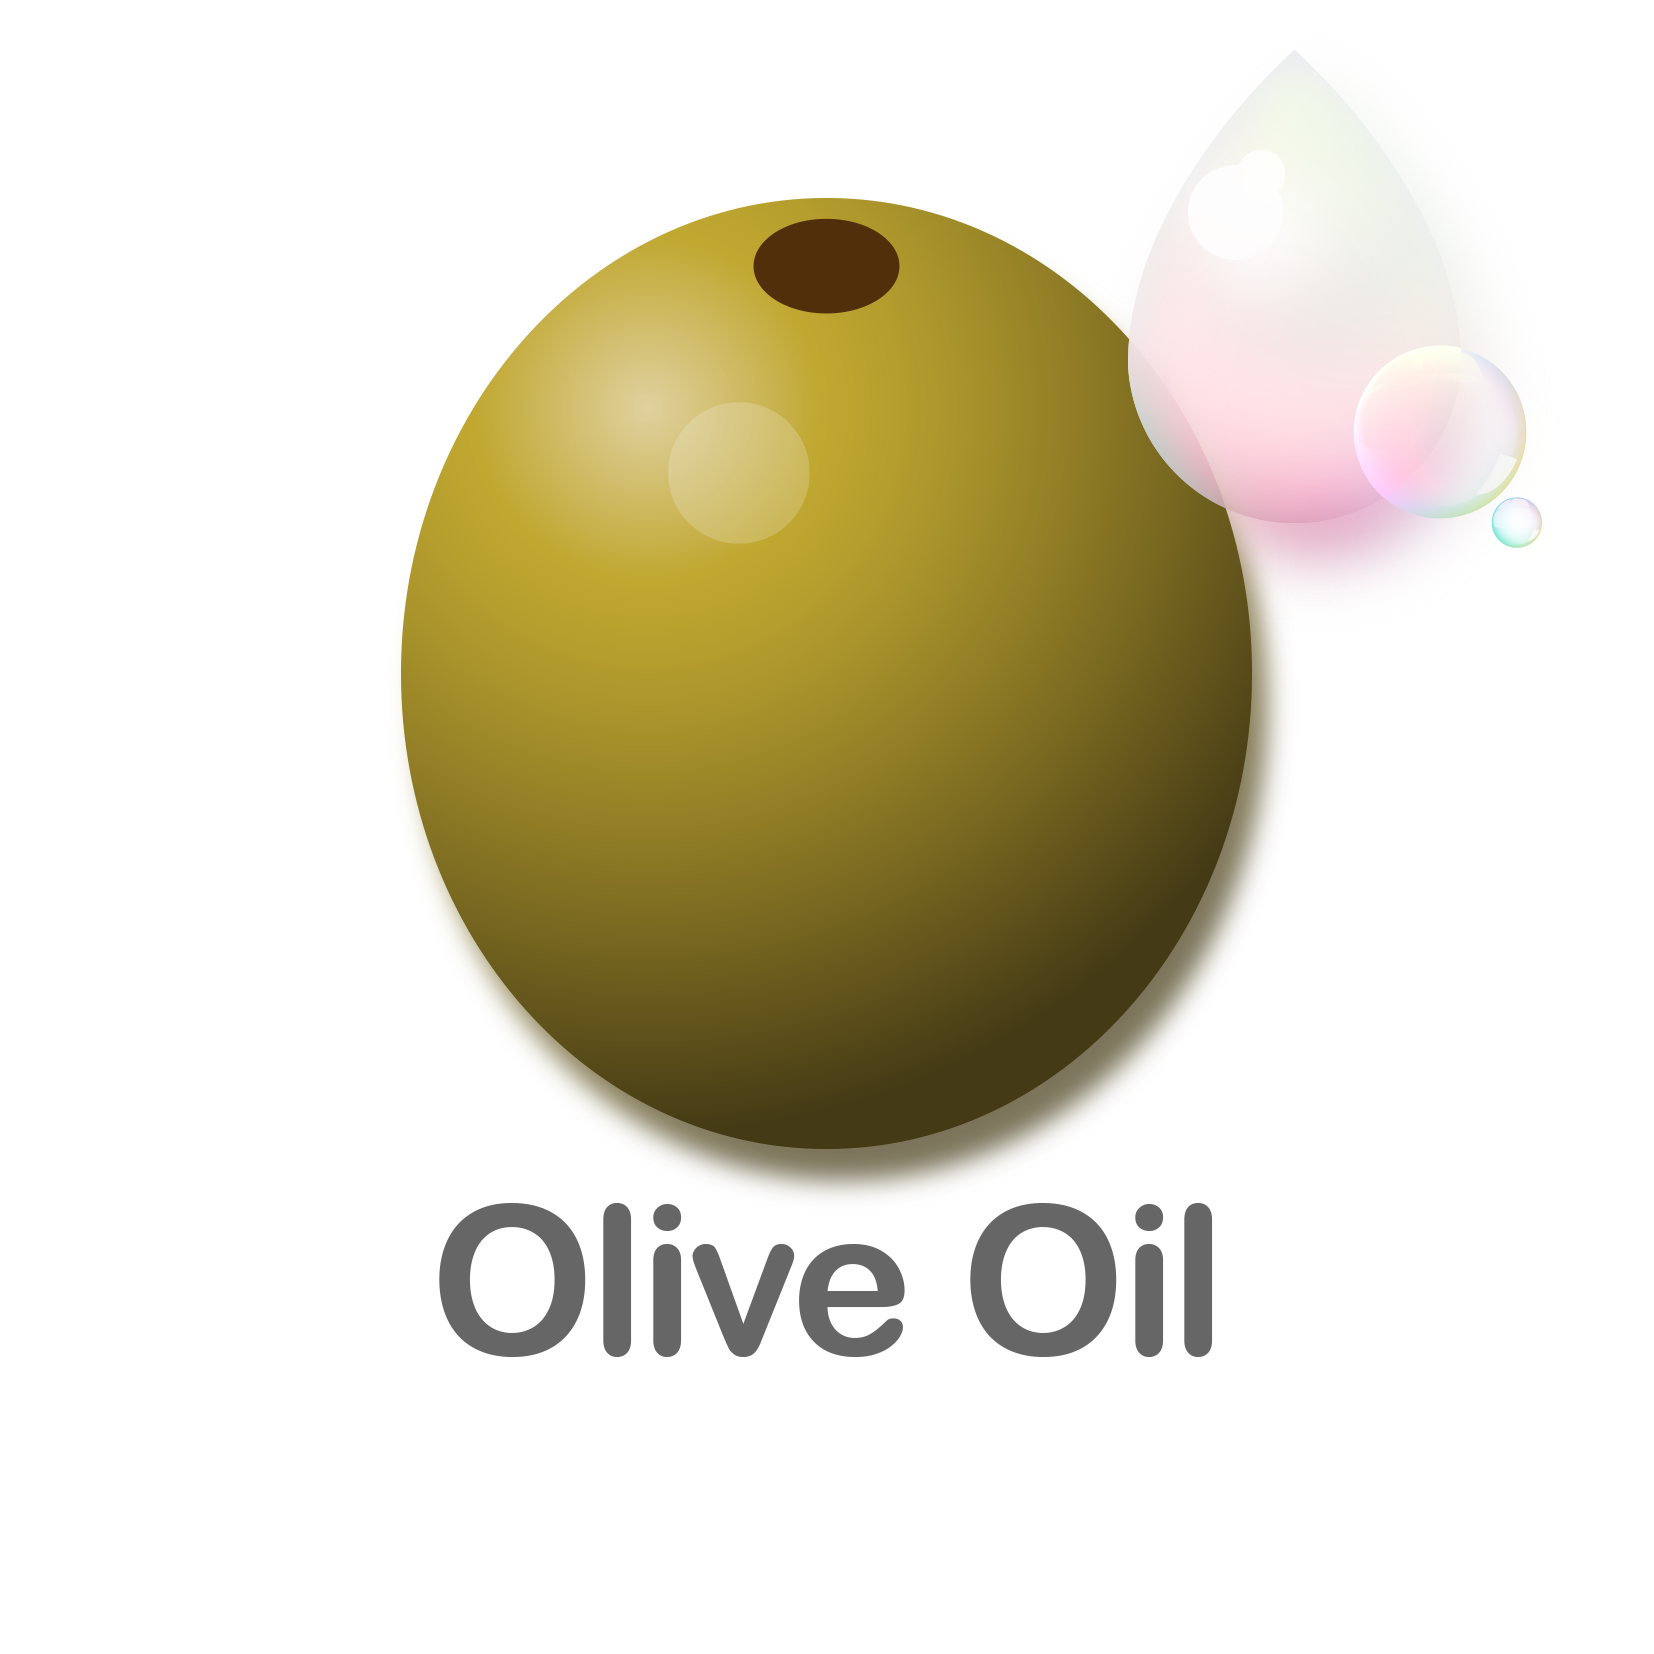 Olive Oil (Copy) (Copy)